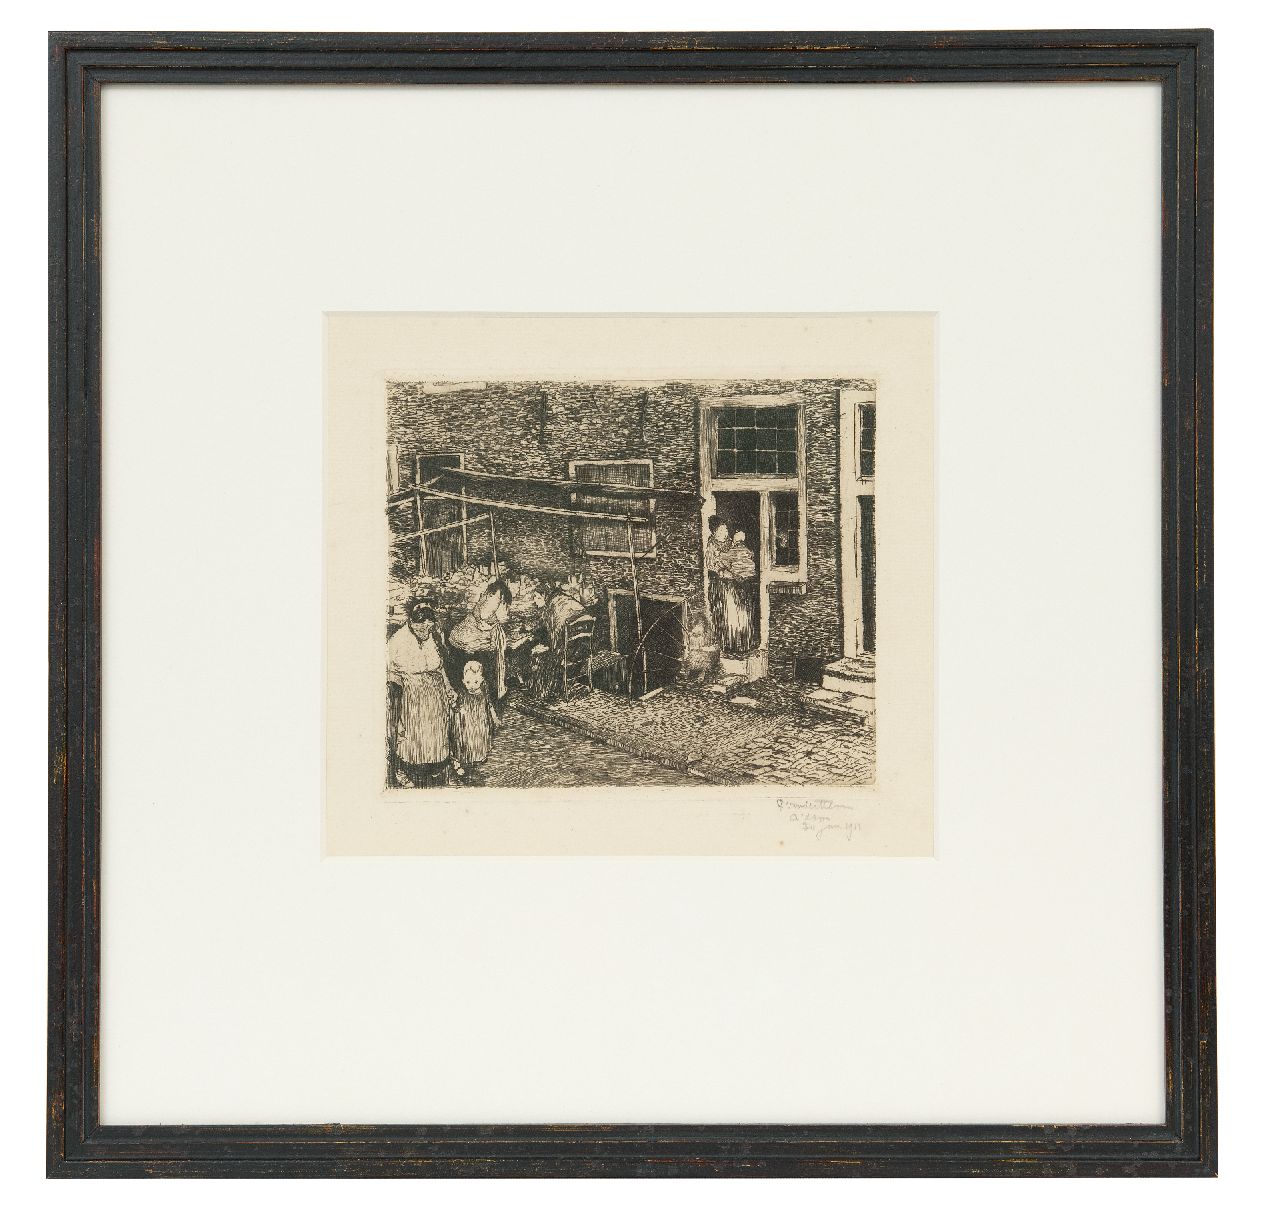 Hem P. van der | Pieter 'Piet' van der Hem | Prints and Multiples offered for sale | Alley in Amsterdam, etching 14.3 x 17.3 cm, signed l.r. and dated '30 jan. 1911'